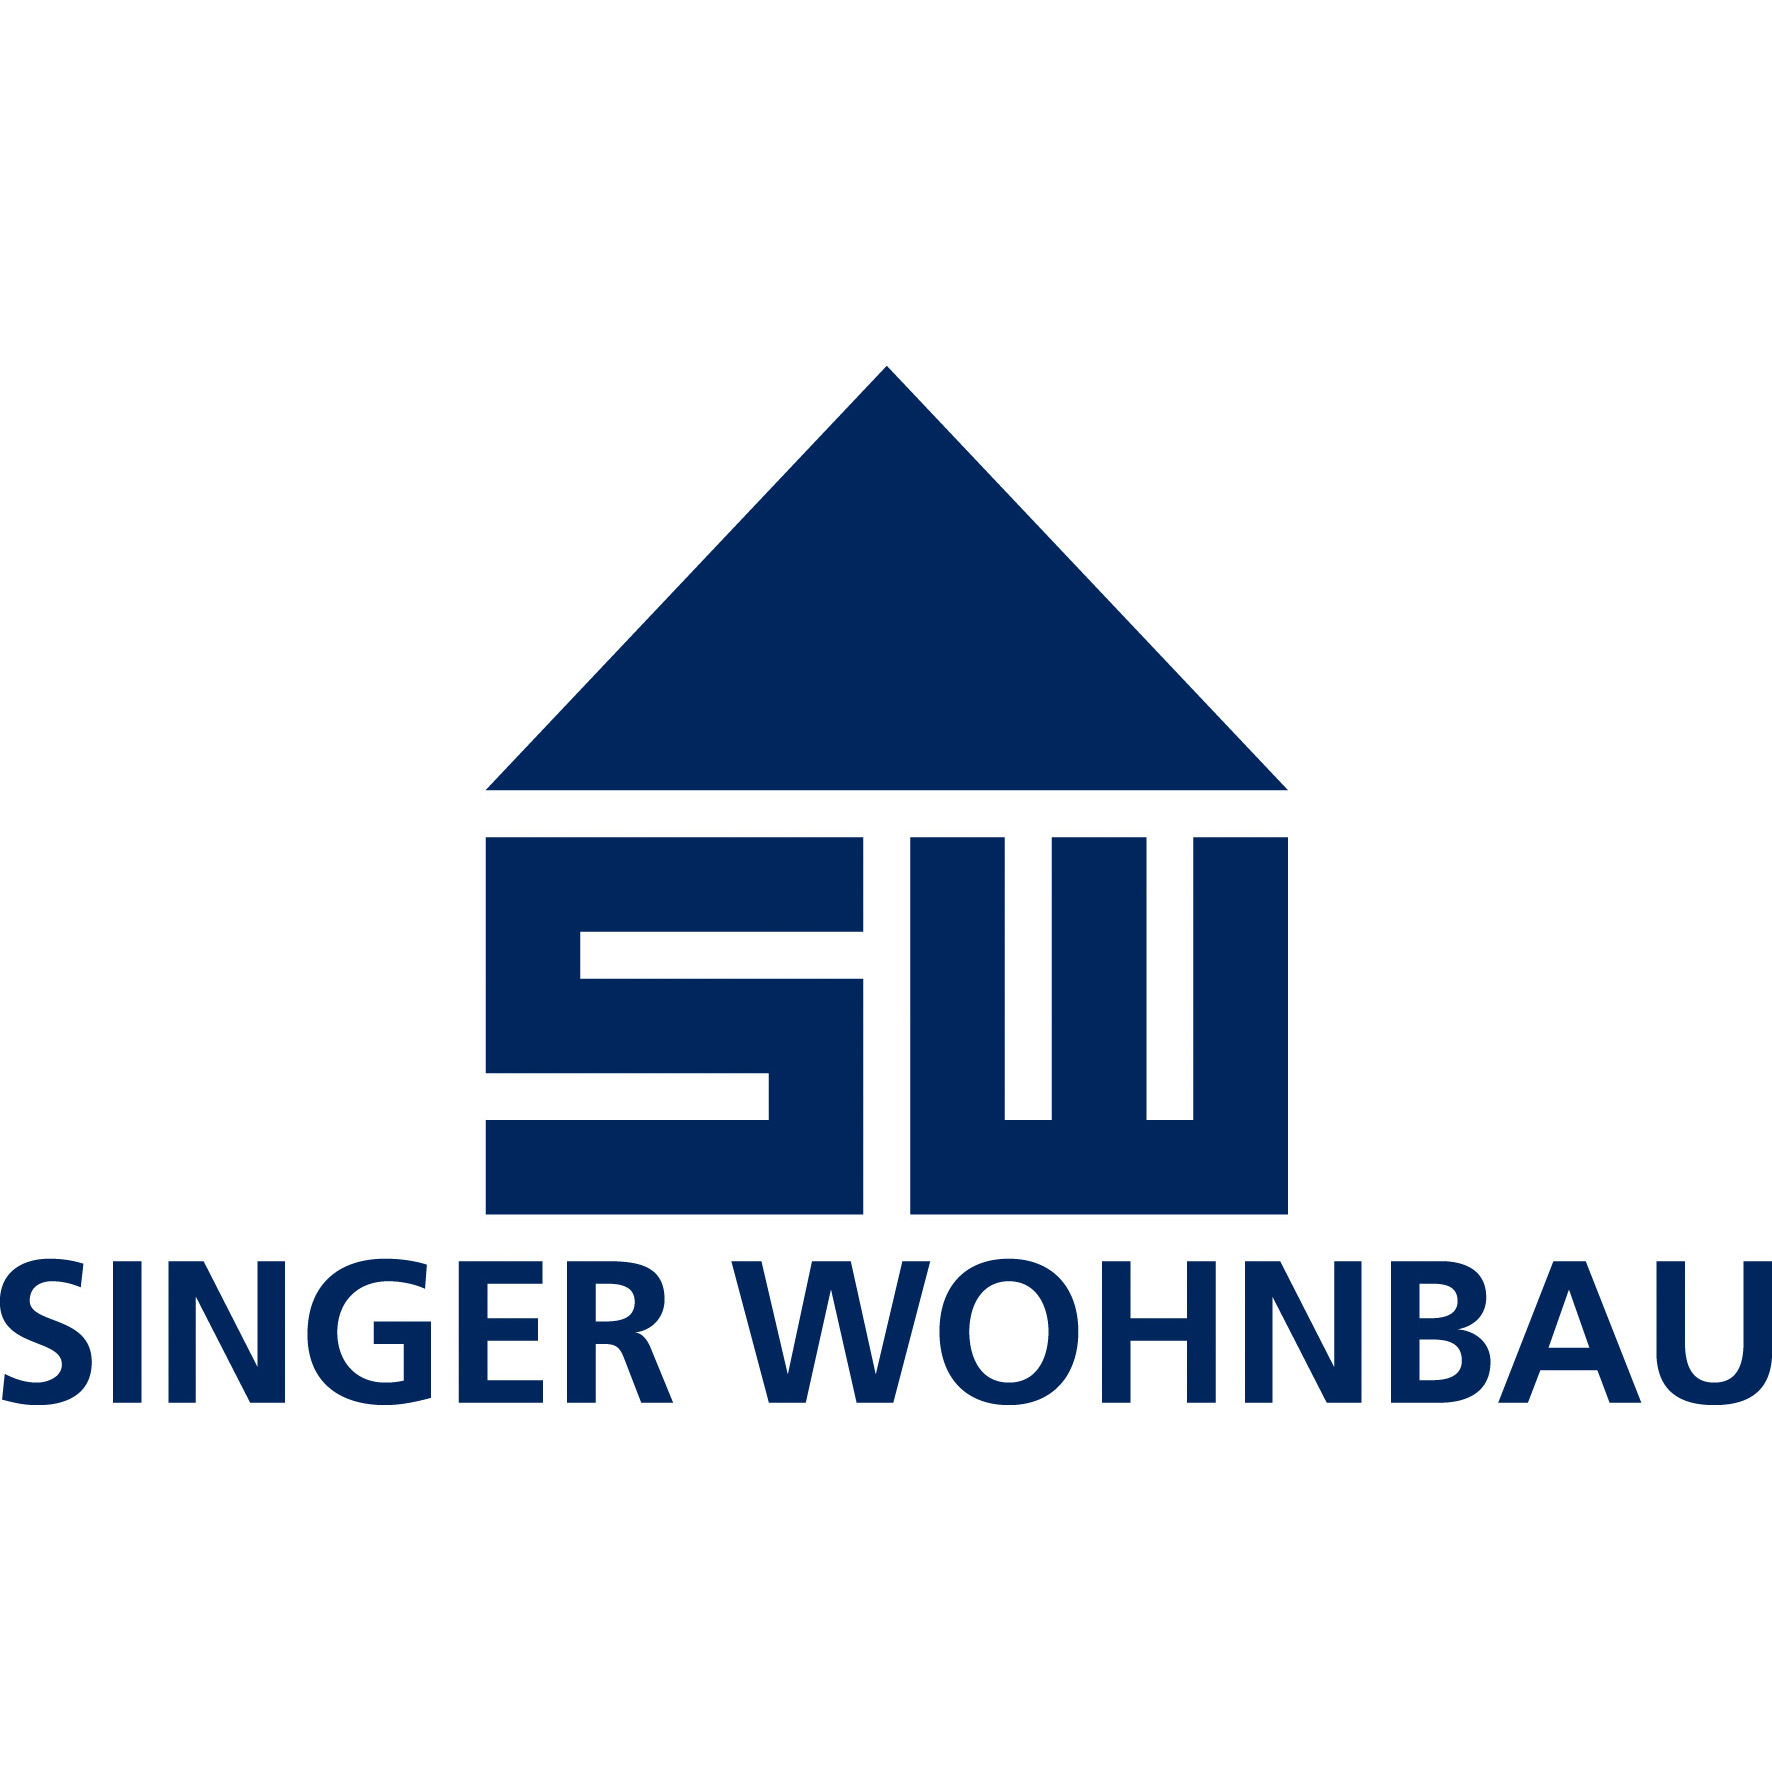 Singer Wohnbau Stuttgart Logo